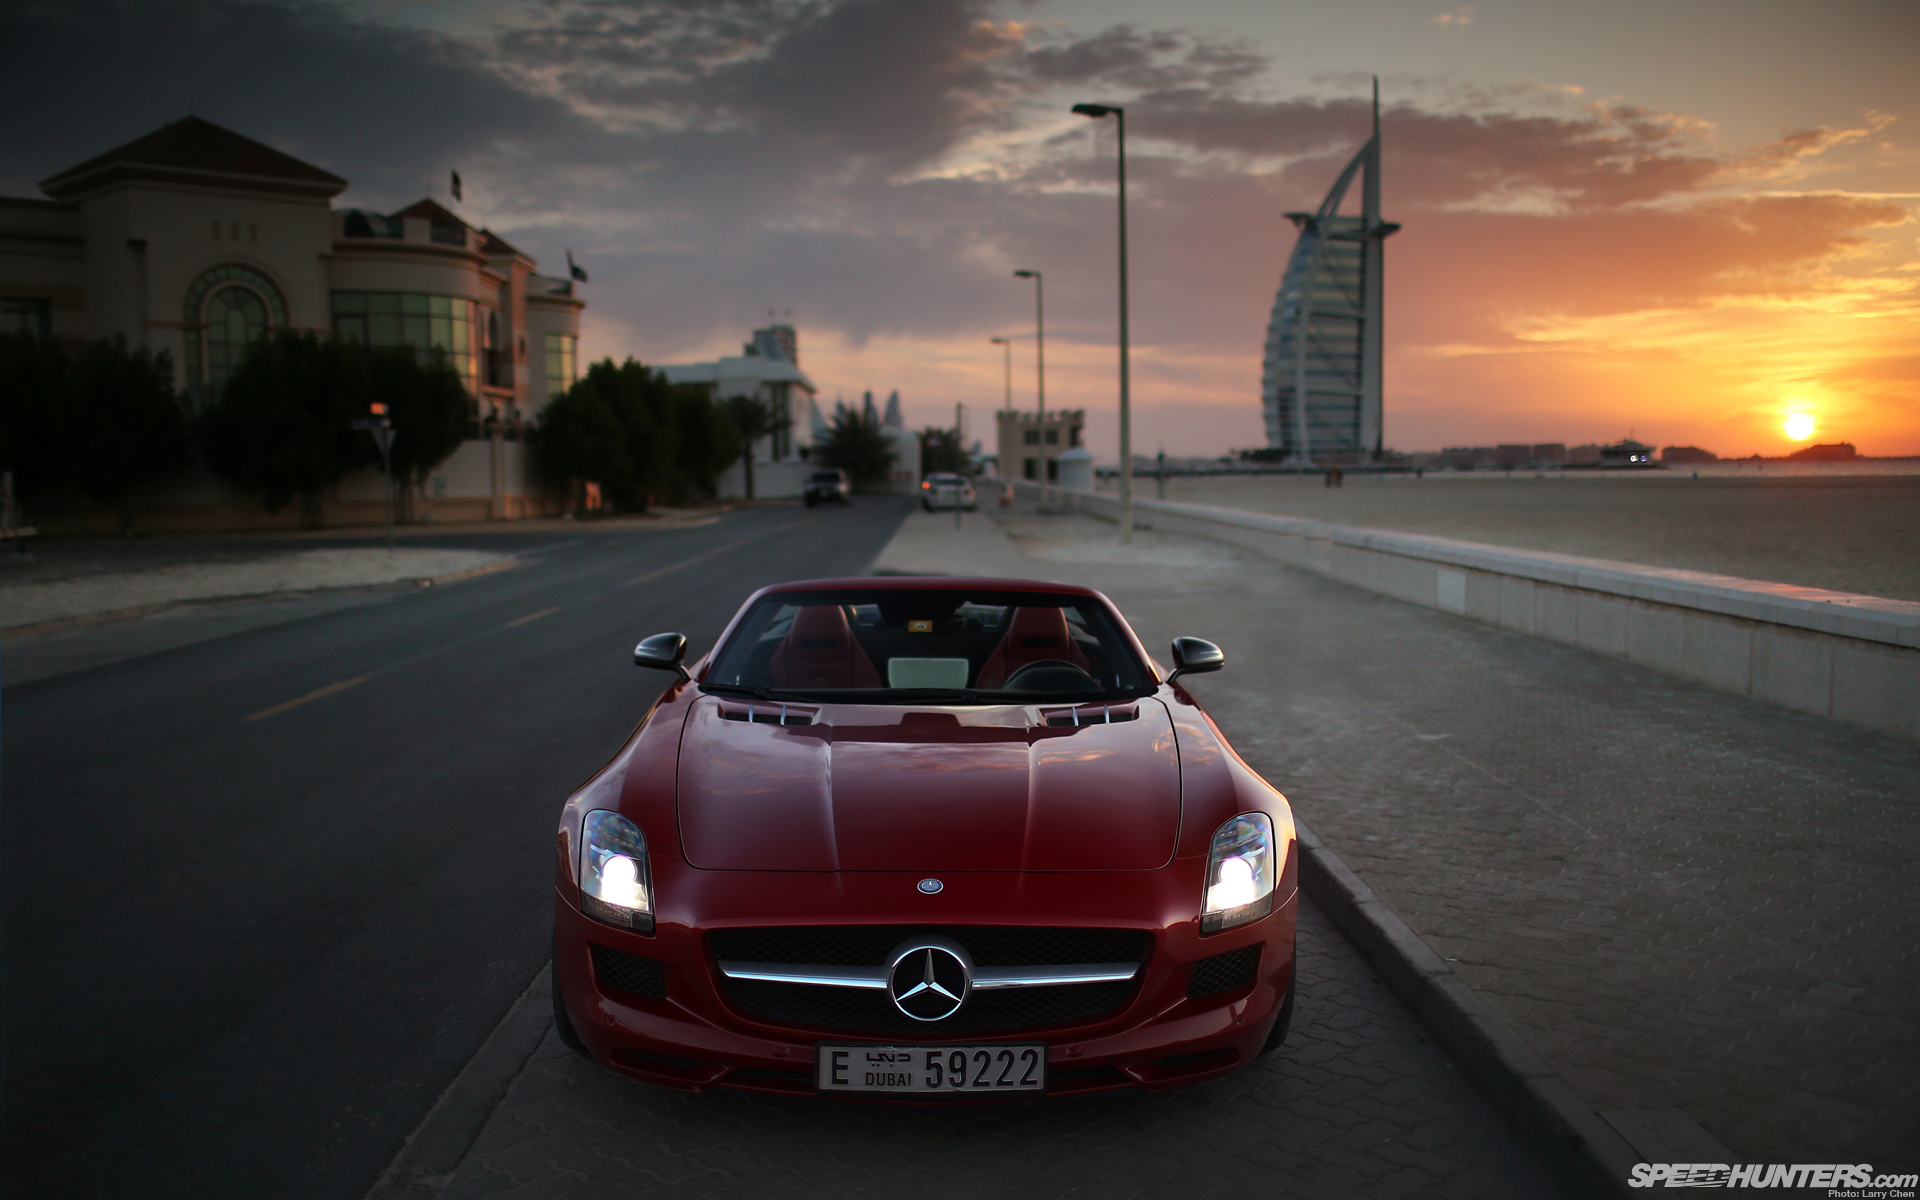 Скачати мобільні шпалери Mercedes Benz Sls Amg, Mercedes Benz, Транспортні Засоби безкоштовно.